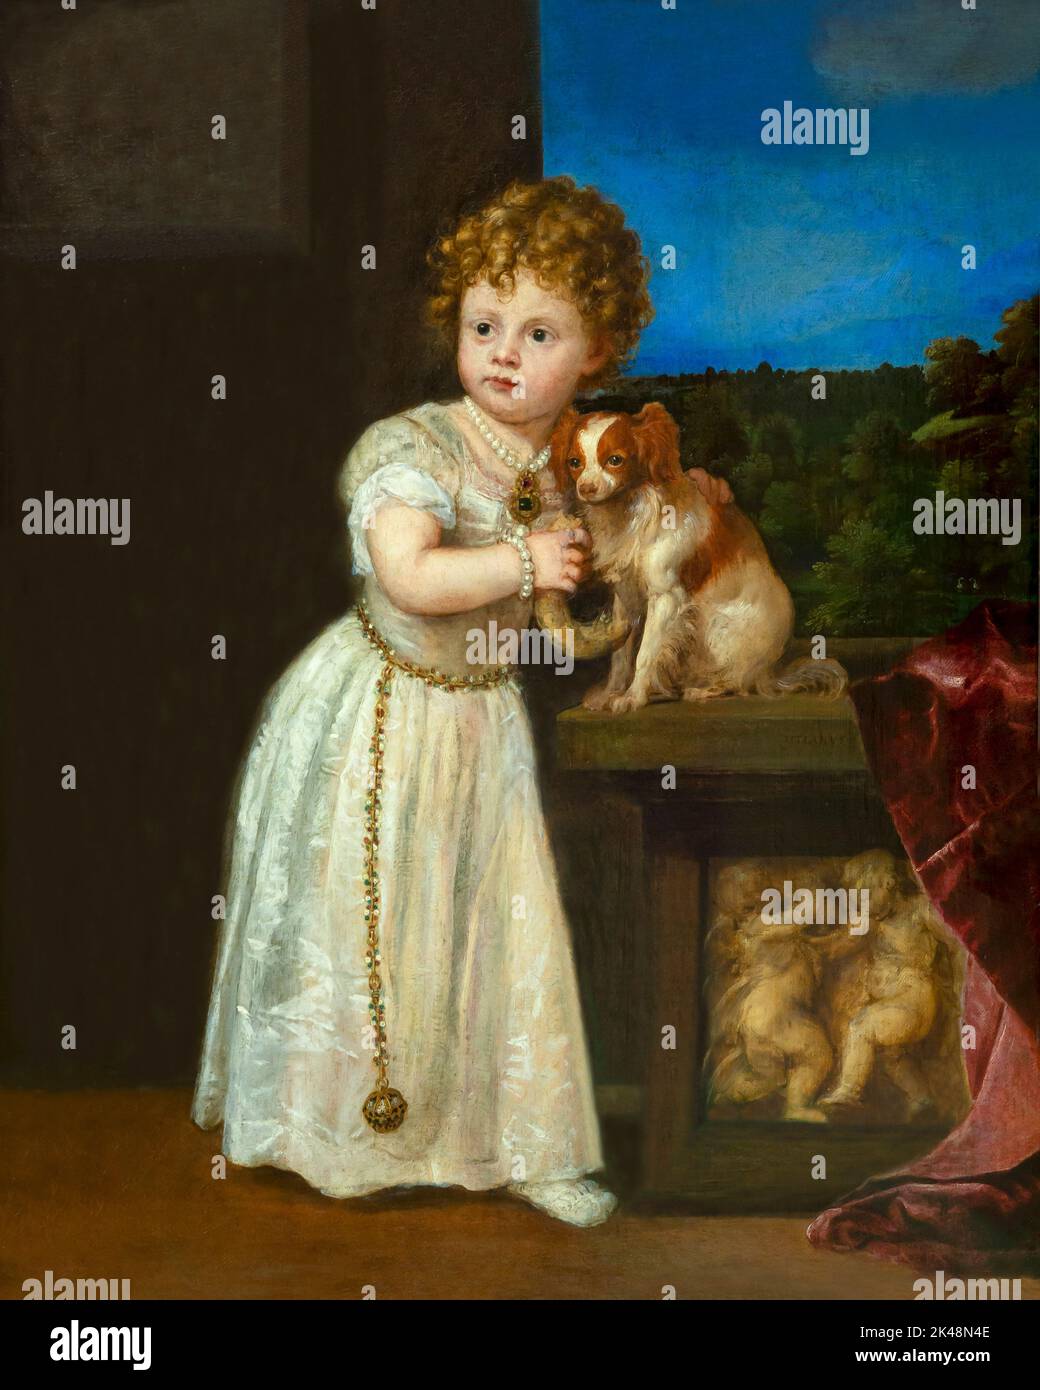 Clarissa Strozzi, aged 2, Titian, Tiziano Vecellio, 1542, Gemaldegalerie, Berlin, Germany, Europe Stock Photo